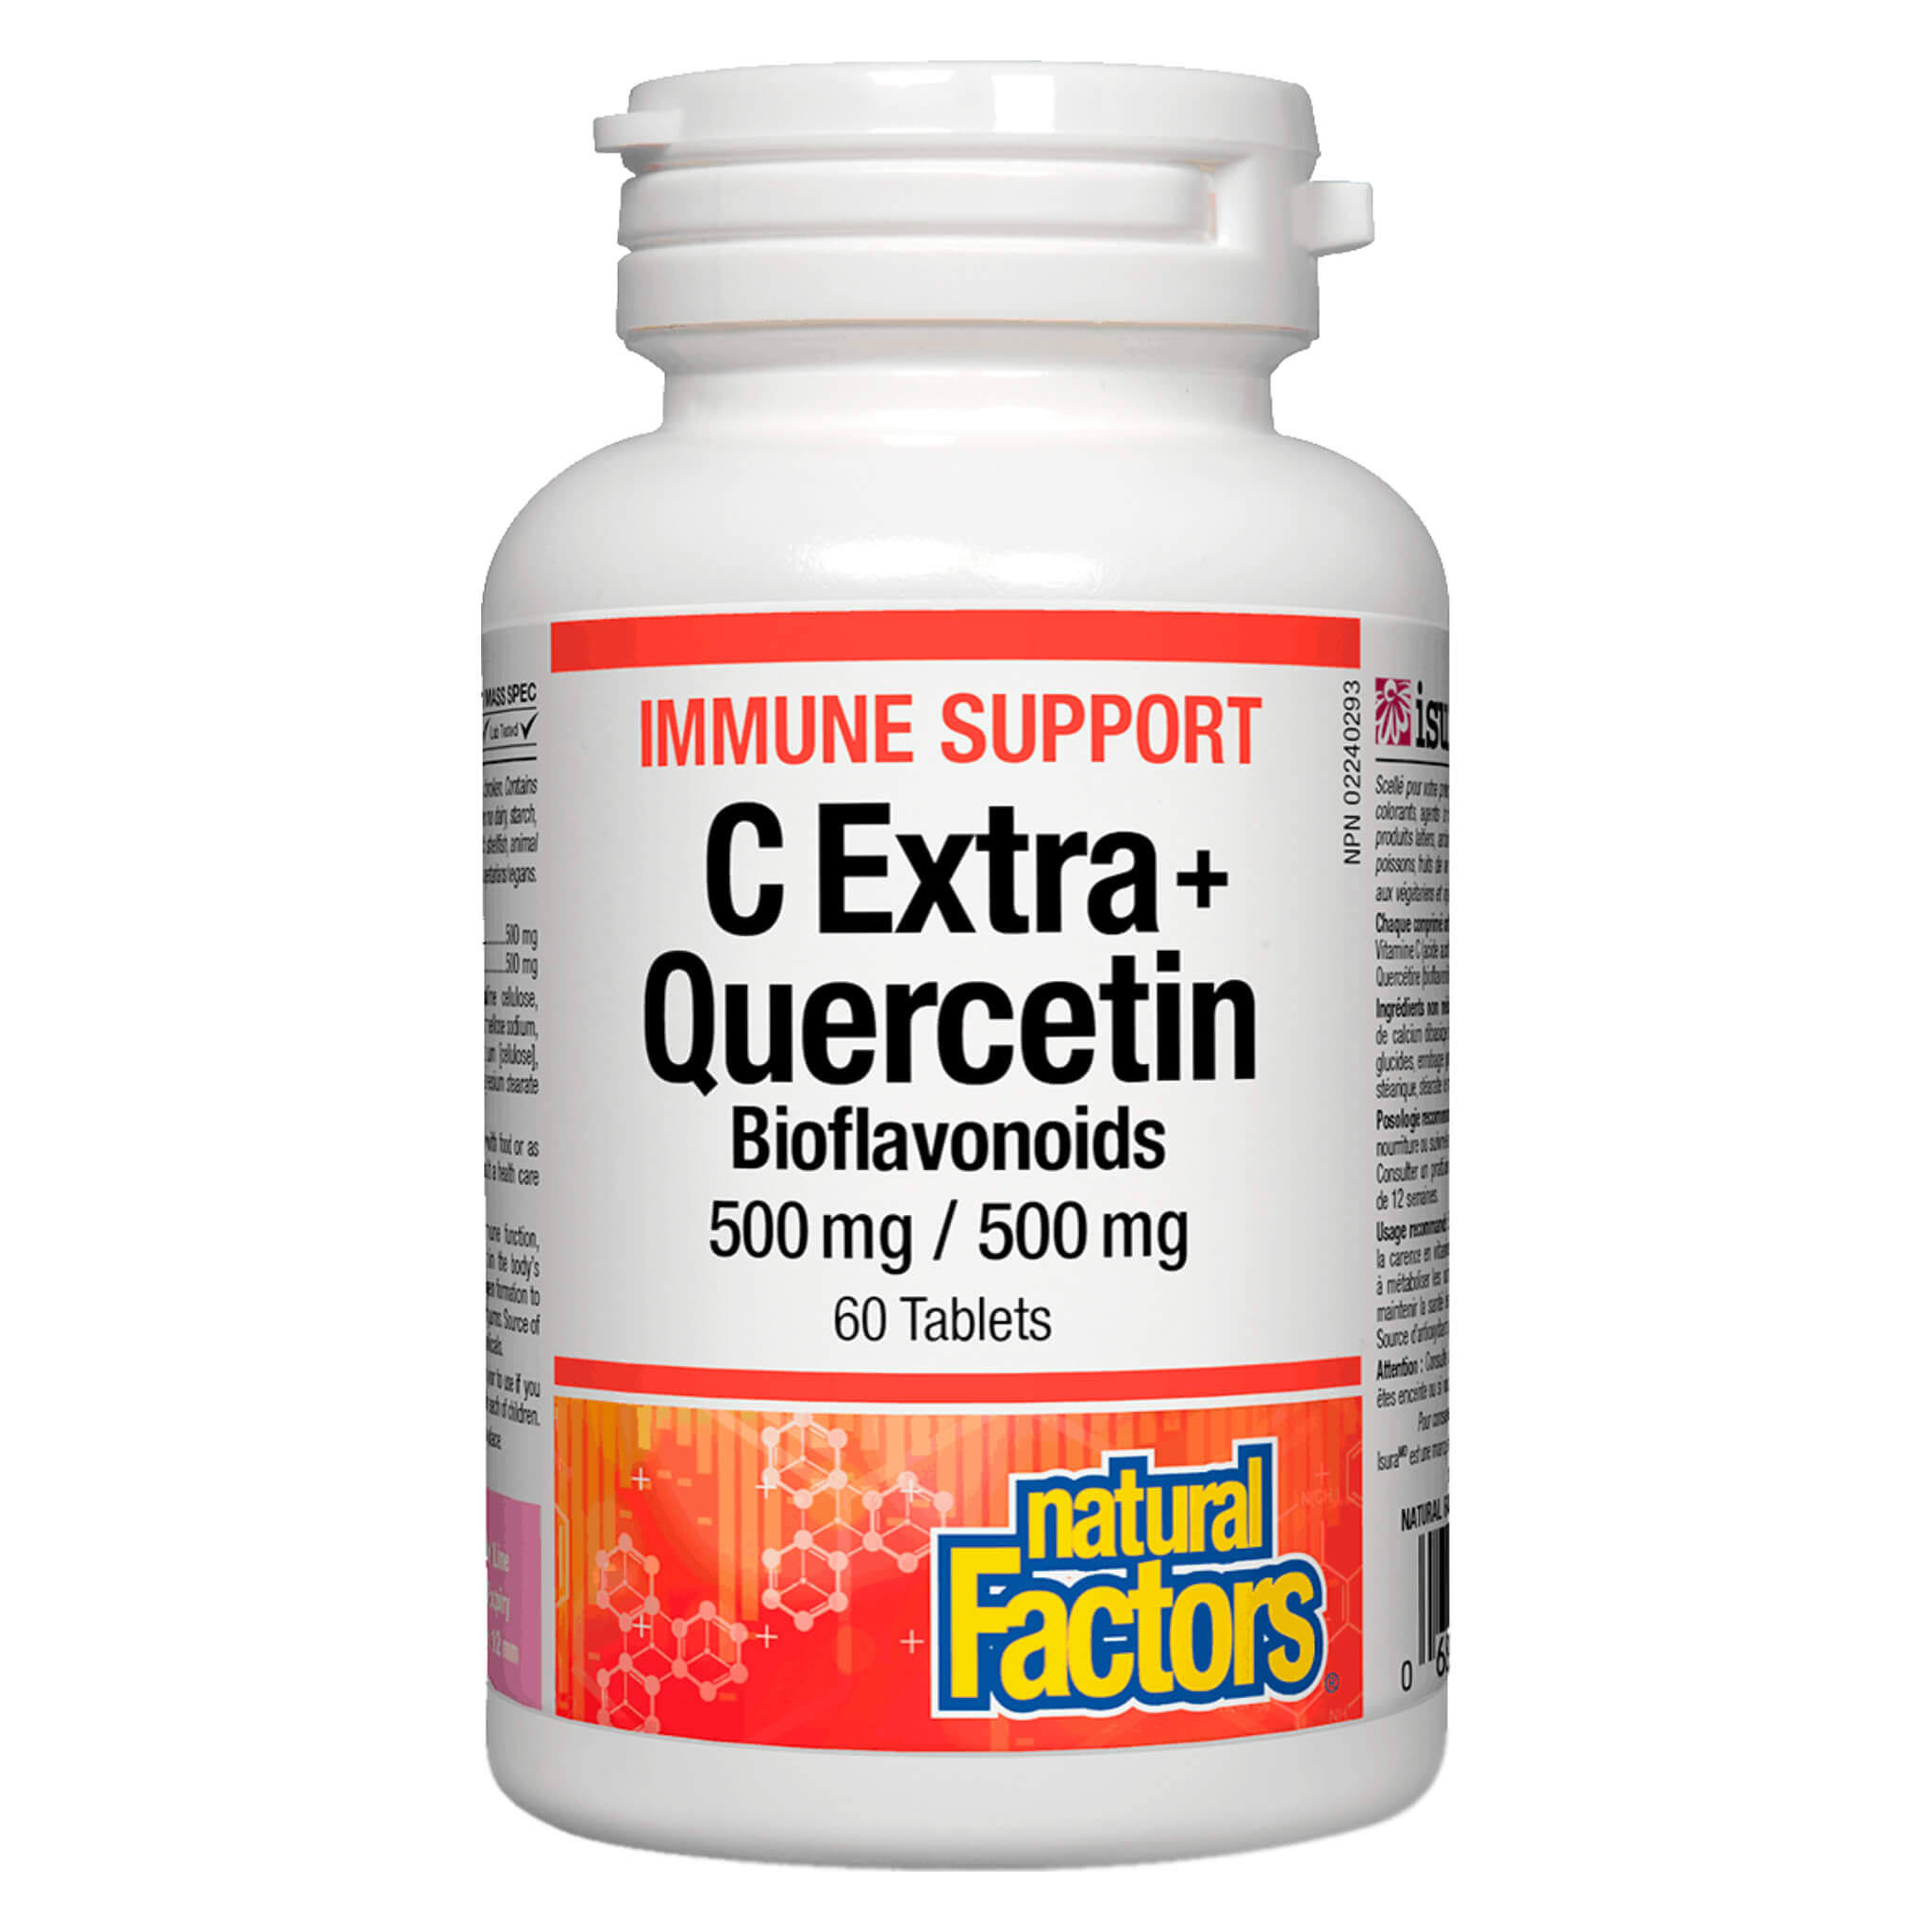 Natural Factors C Extra + Quercetin Bioflavonoids 60 Tablets